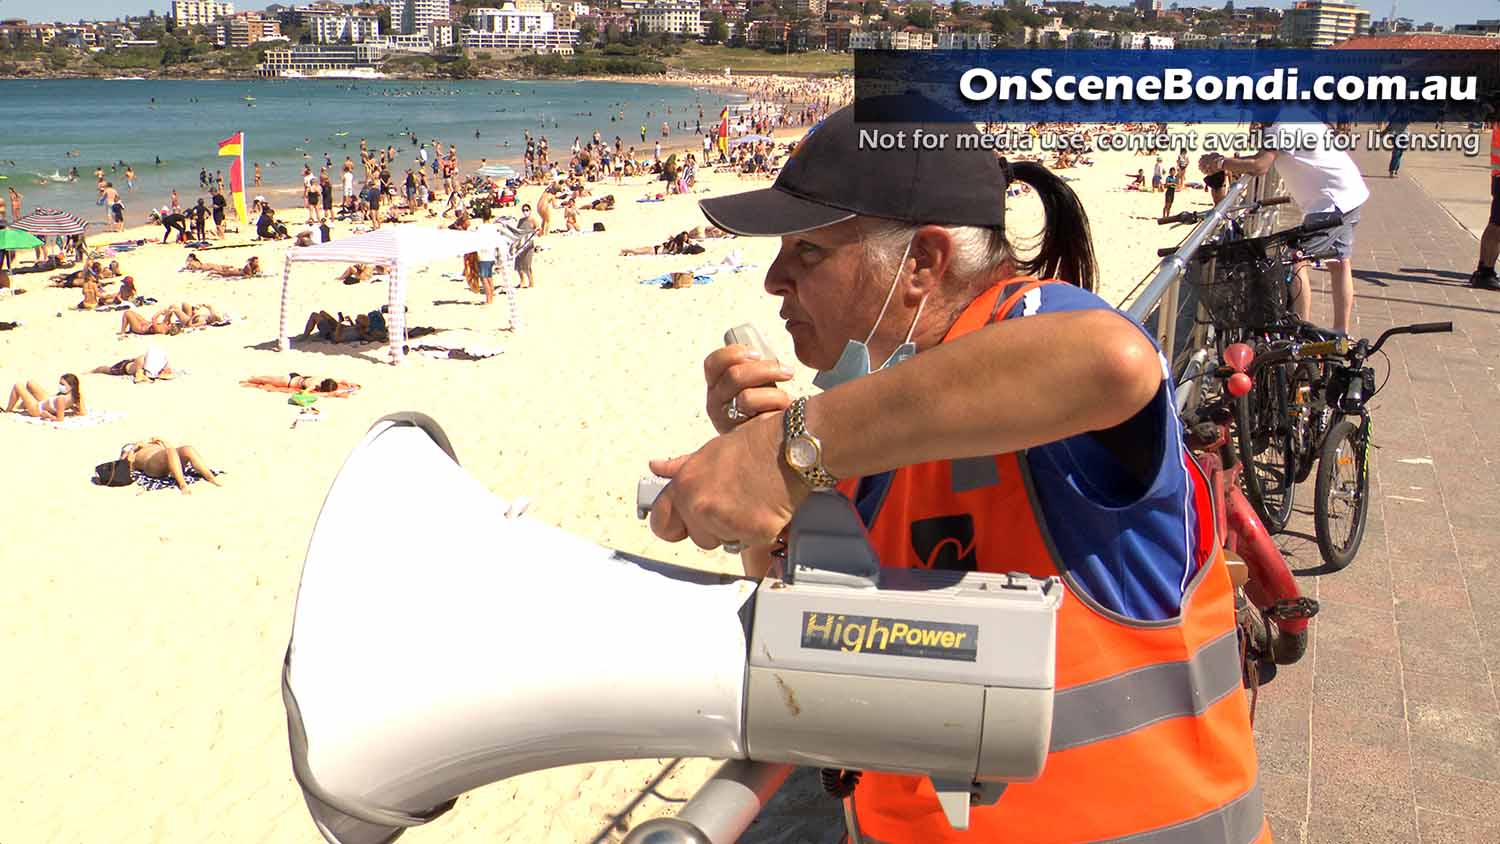 Police operation targets Bondi Beach beachgoers breaching COVID health orders